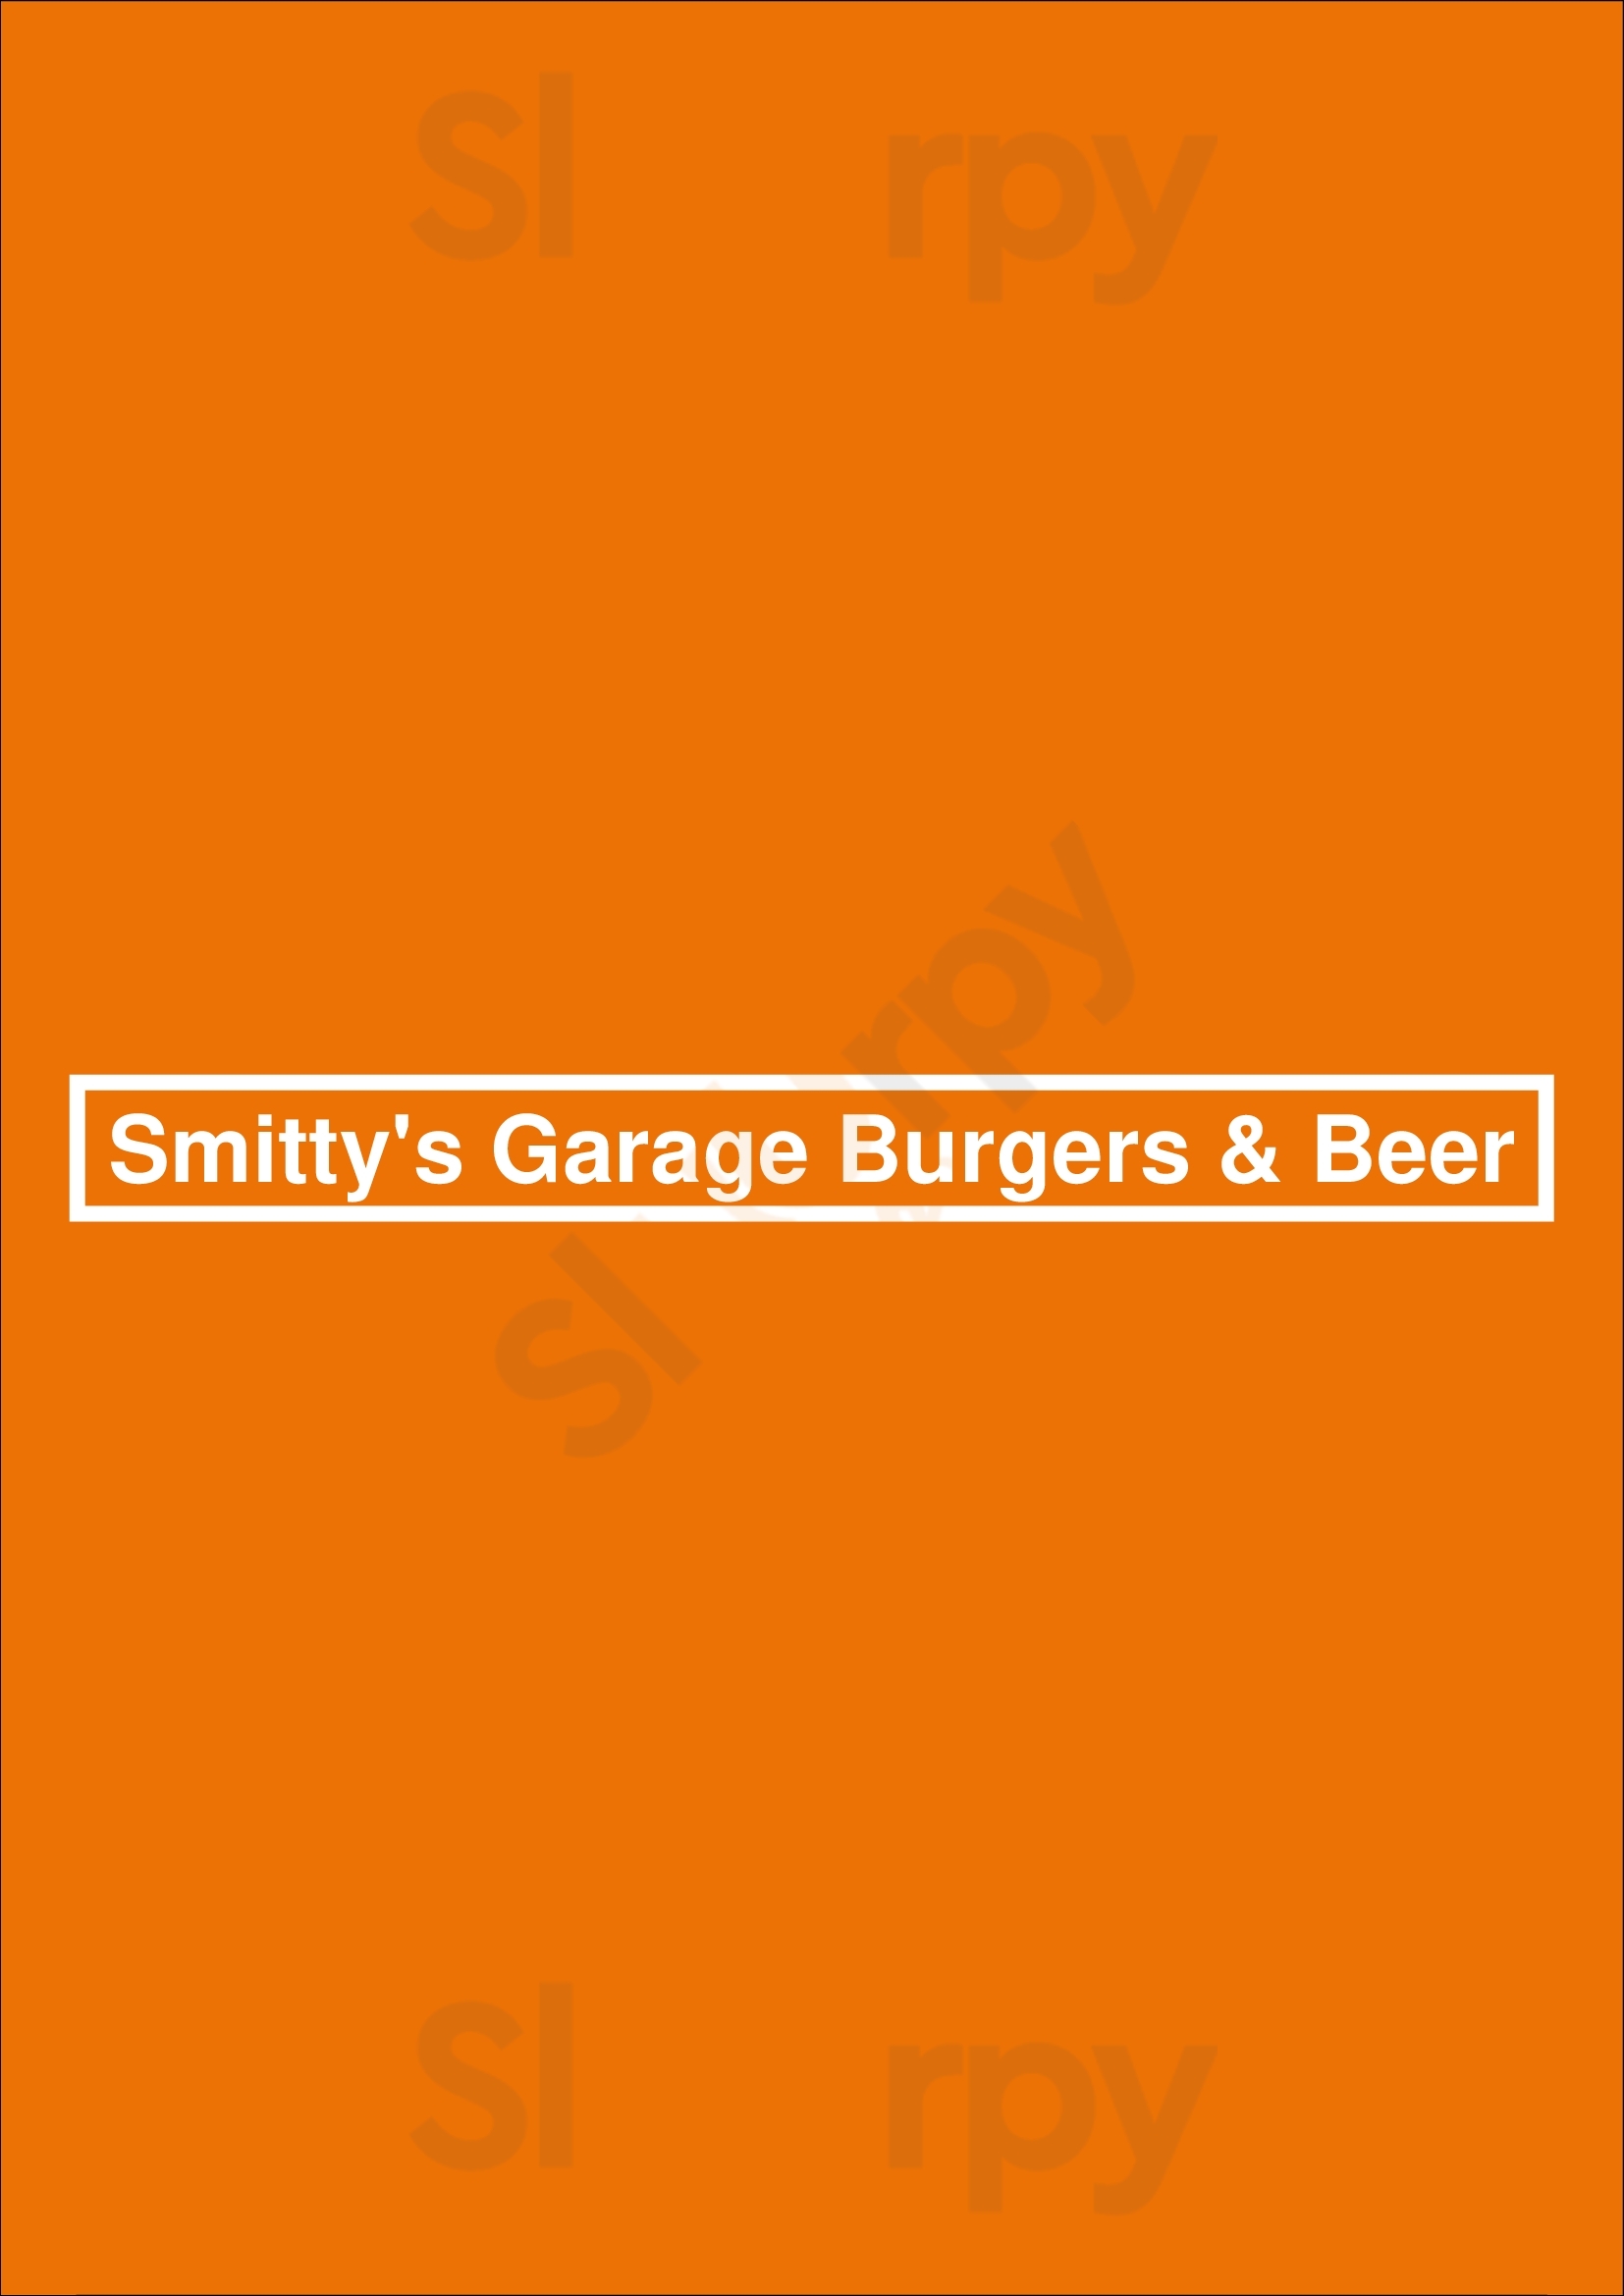 Smitty's Garage Burgers & Beer Fayetteville Menu - 1